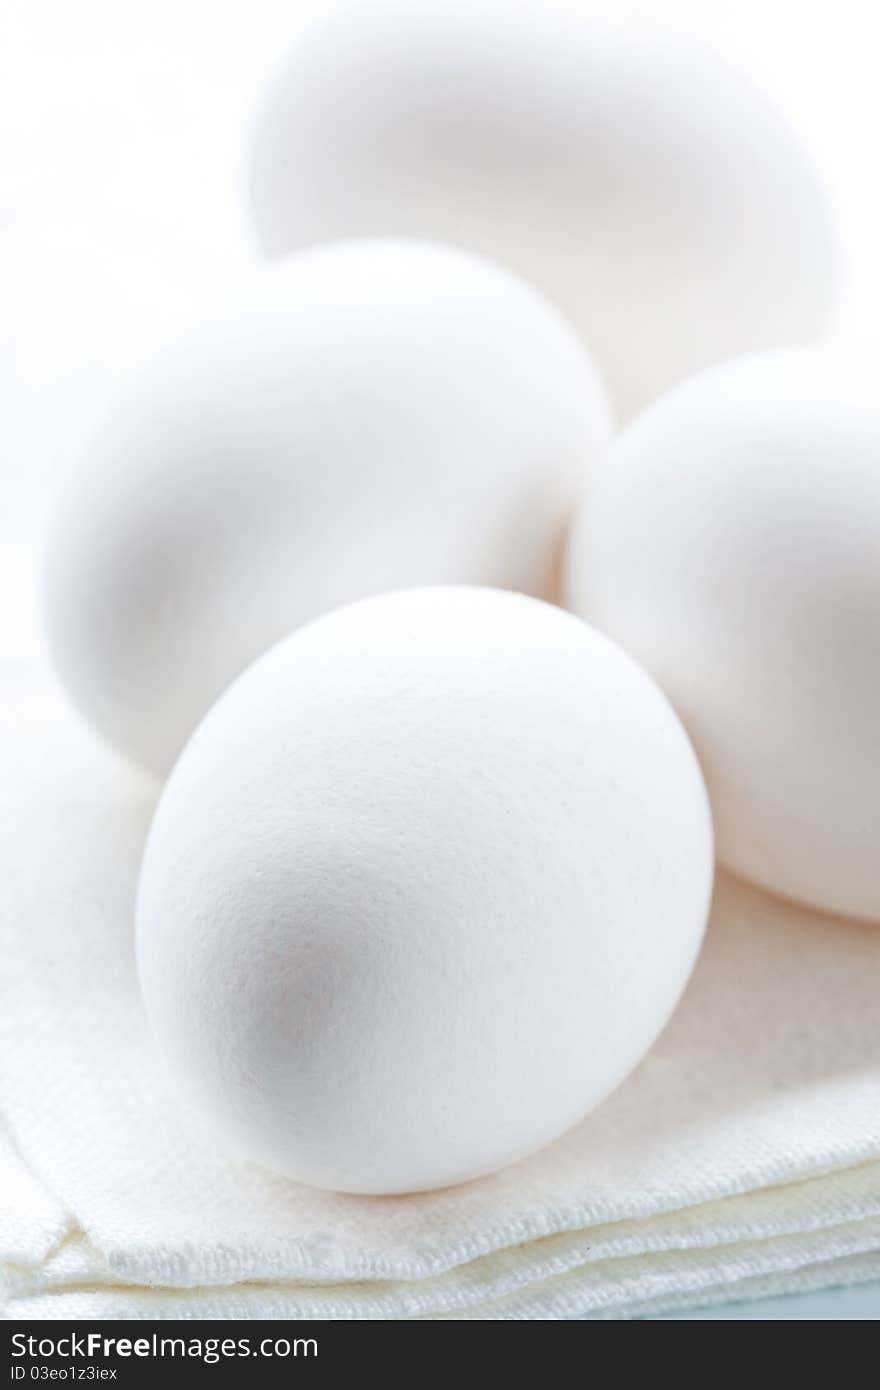 Eggs on a white background, shallow dof.